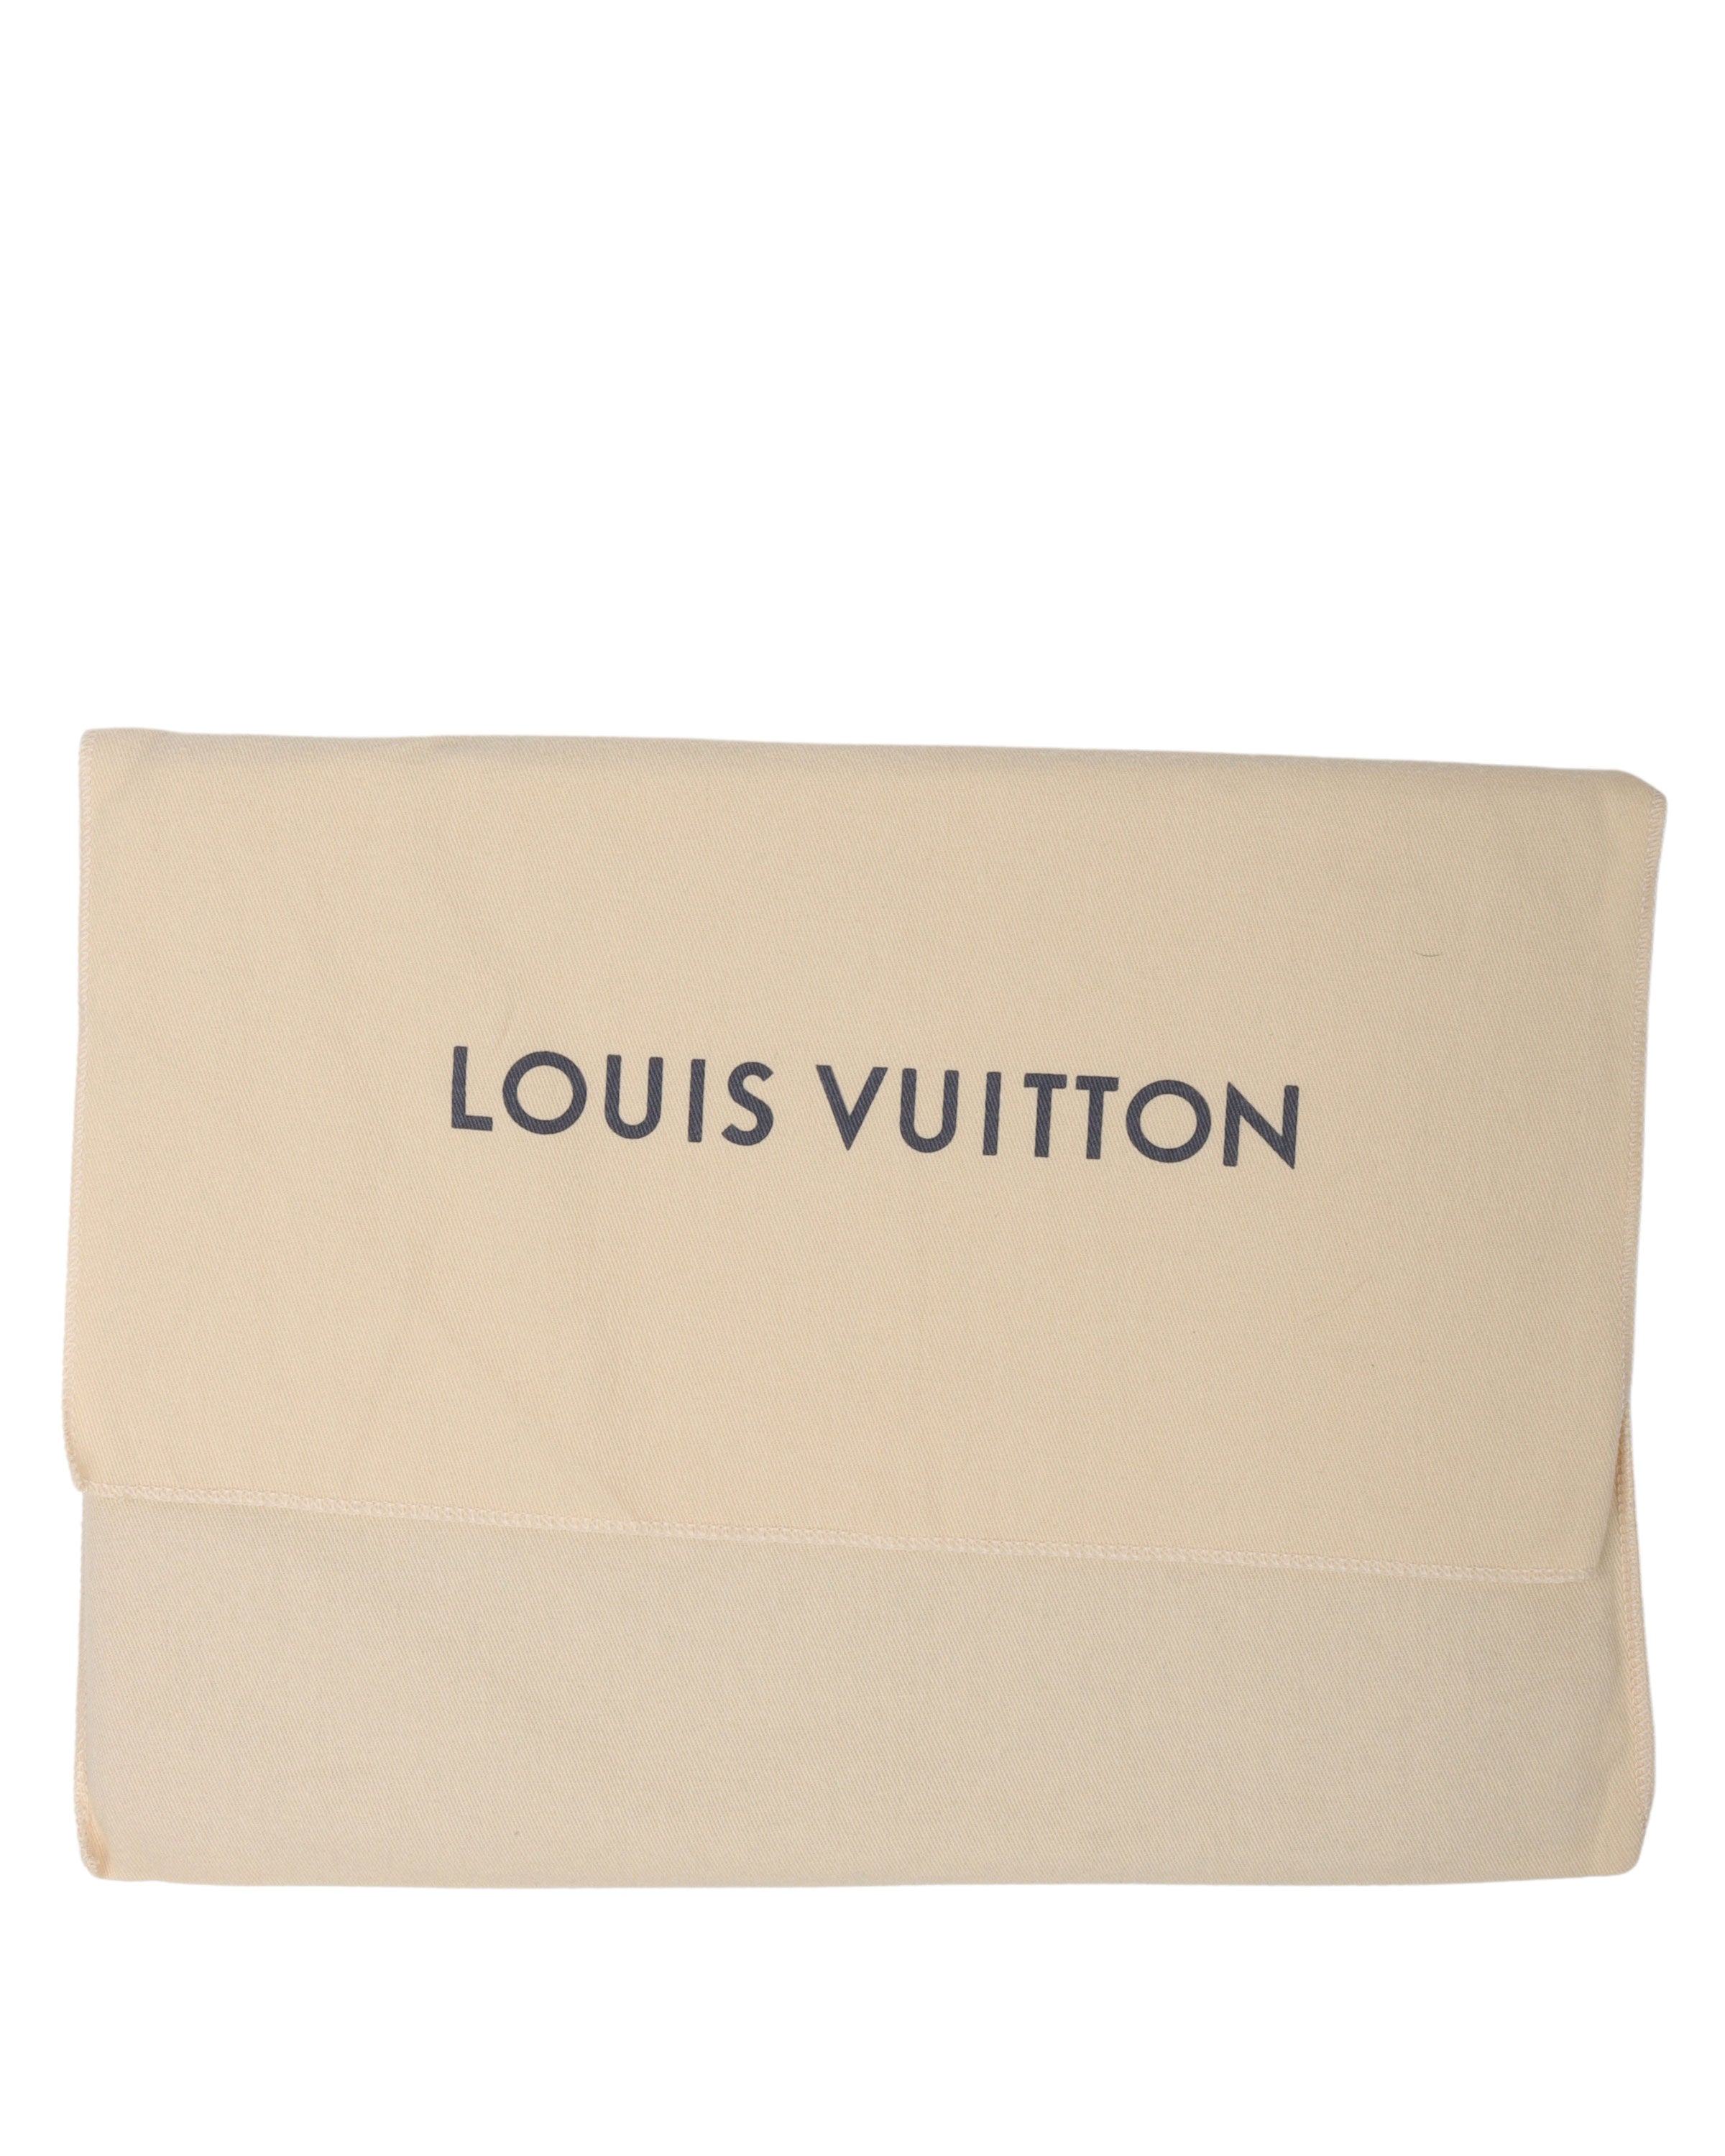 Louis Vuitton Document Holder - 5 For Sale on 1stDibs  lv file holder,  document holder louis vuitton, louis vuitton folder